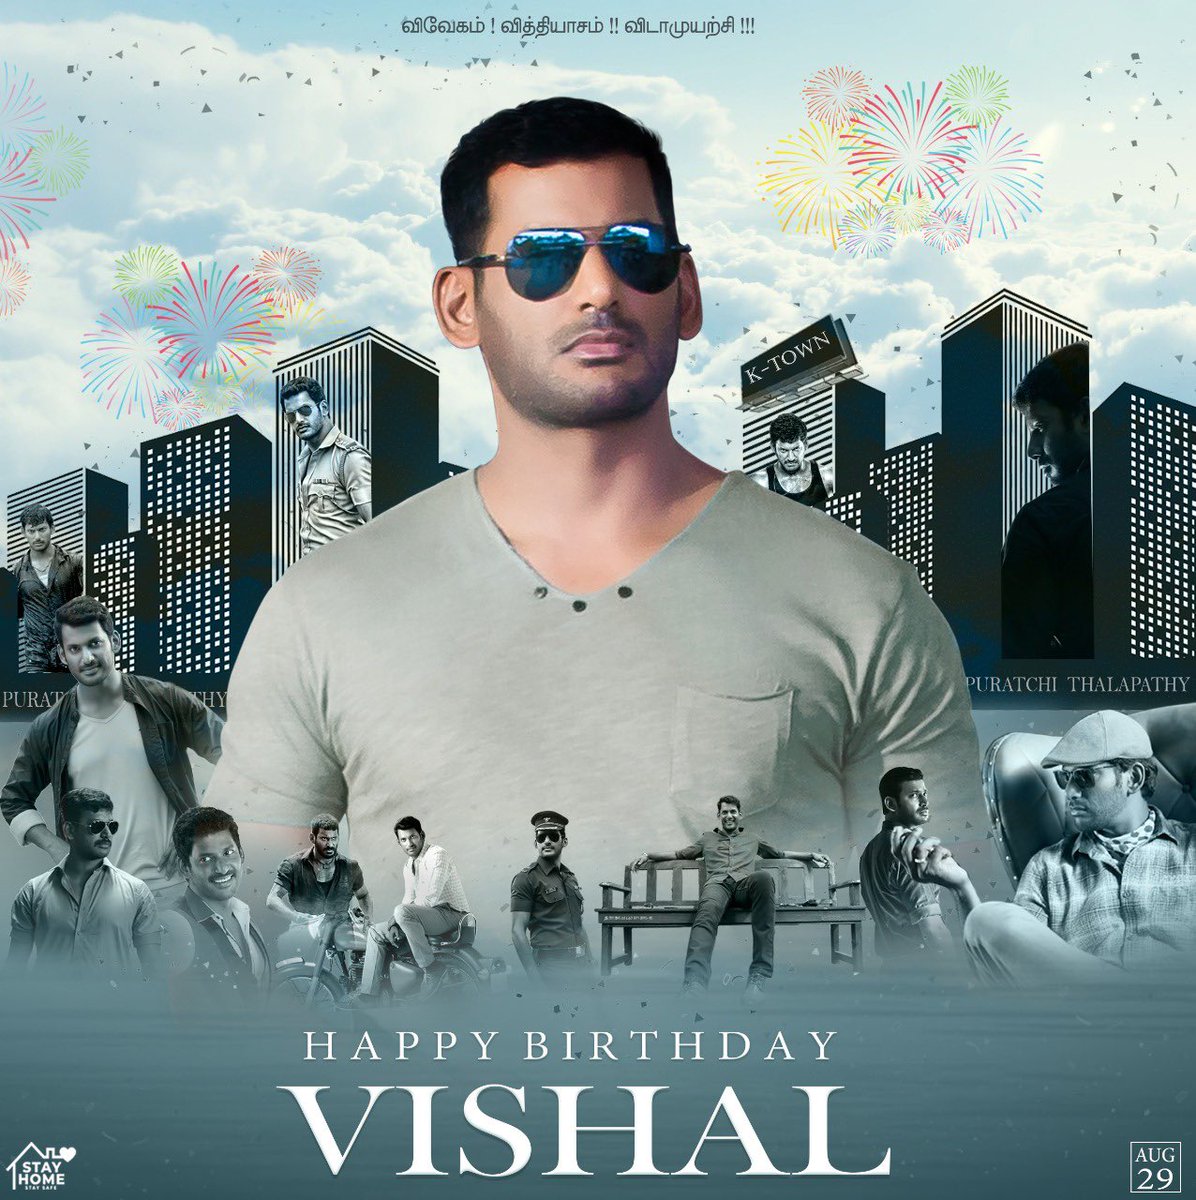 Here's the nice CDP for @VishalKOfficial’s Birthday tomo. Advance B'day wishes sir 👍

#Vishal
#HBDVishal
#HappyBirthdayVishal 
#VishalBdayCDP 
@VffVishal